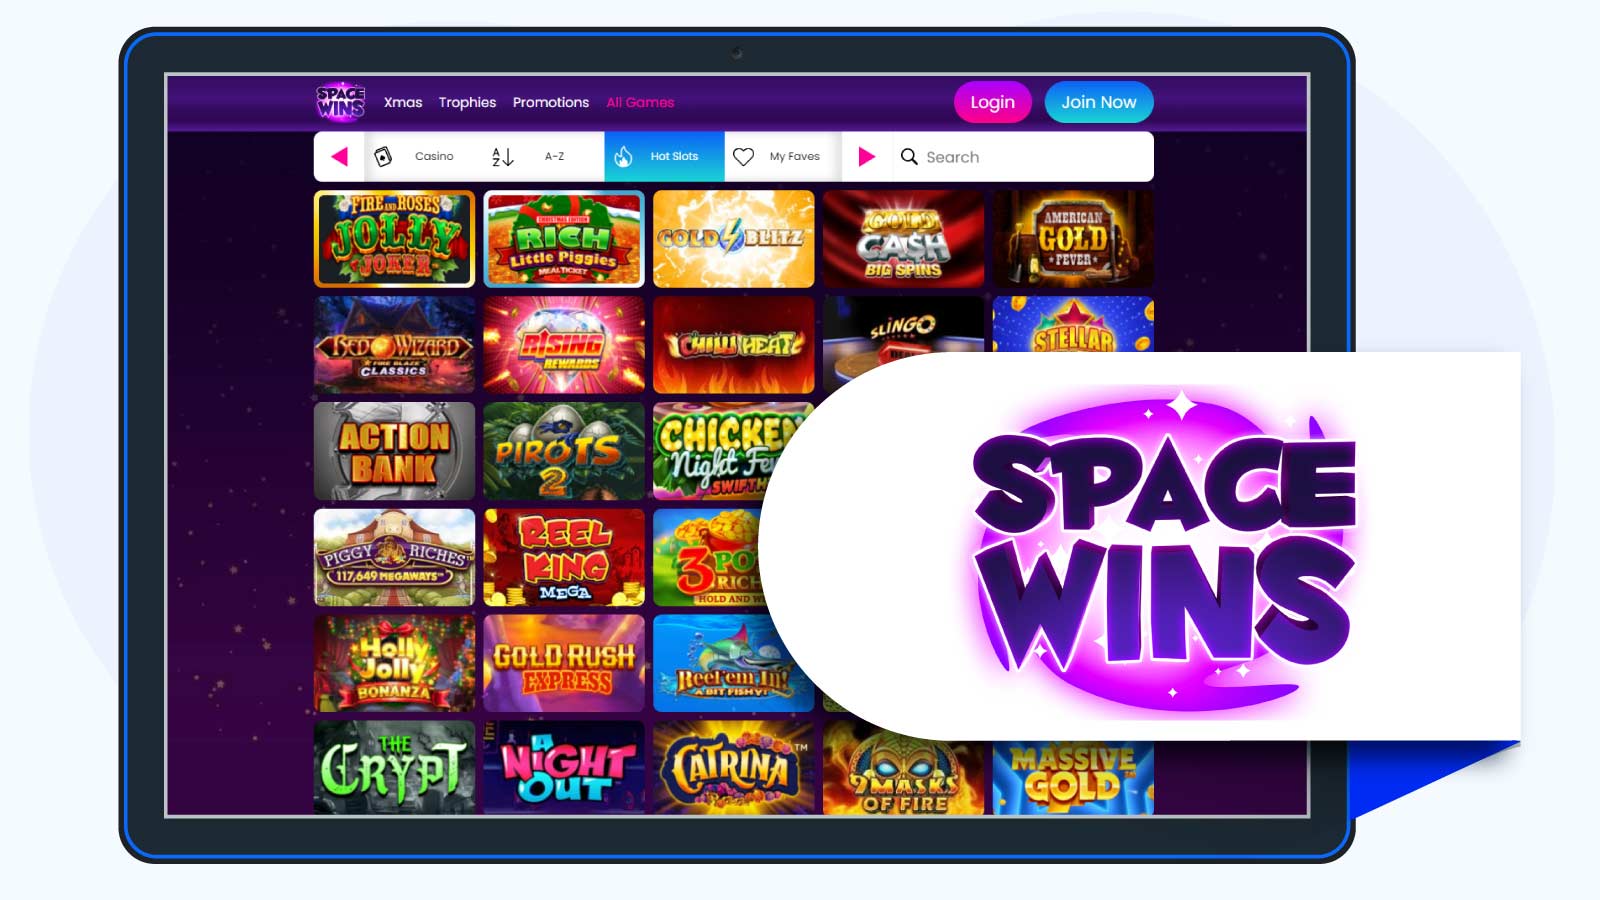 Space Wins Casino- 5 No Deposit Free Spins for Starburst